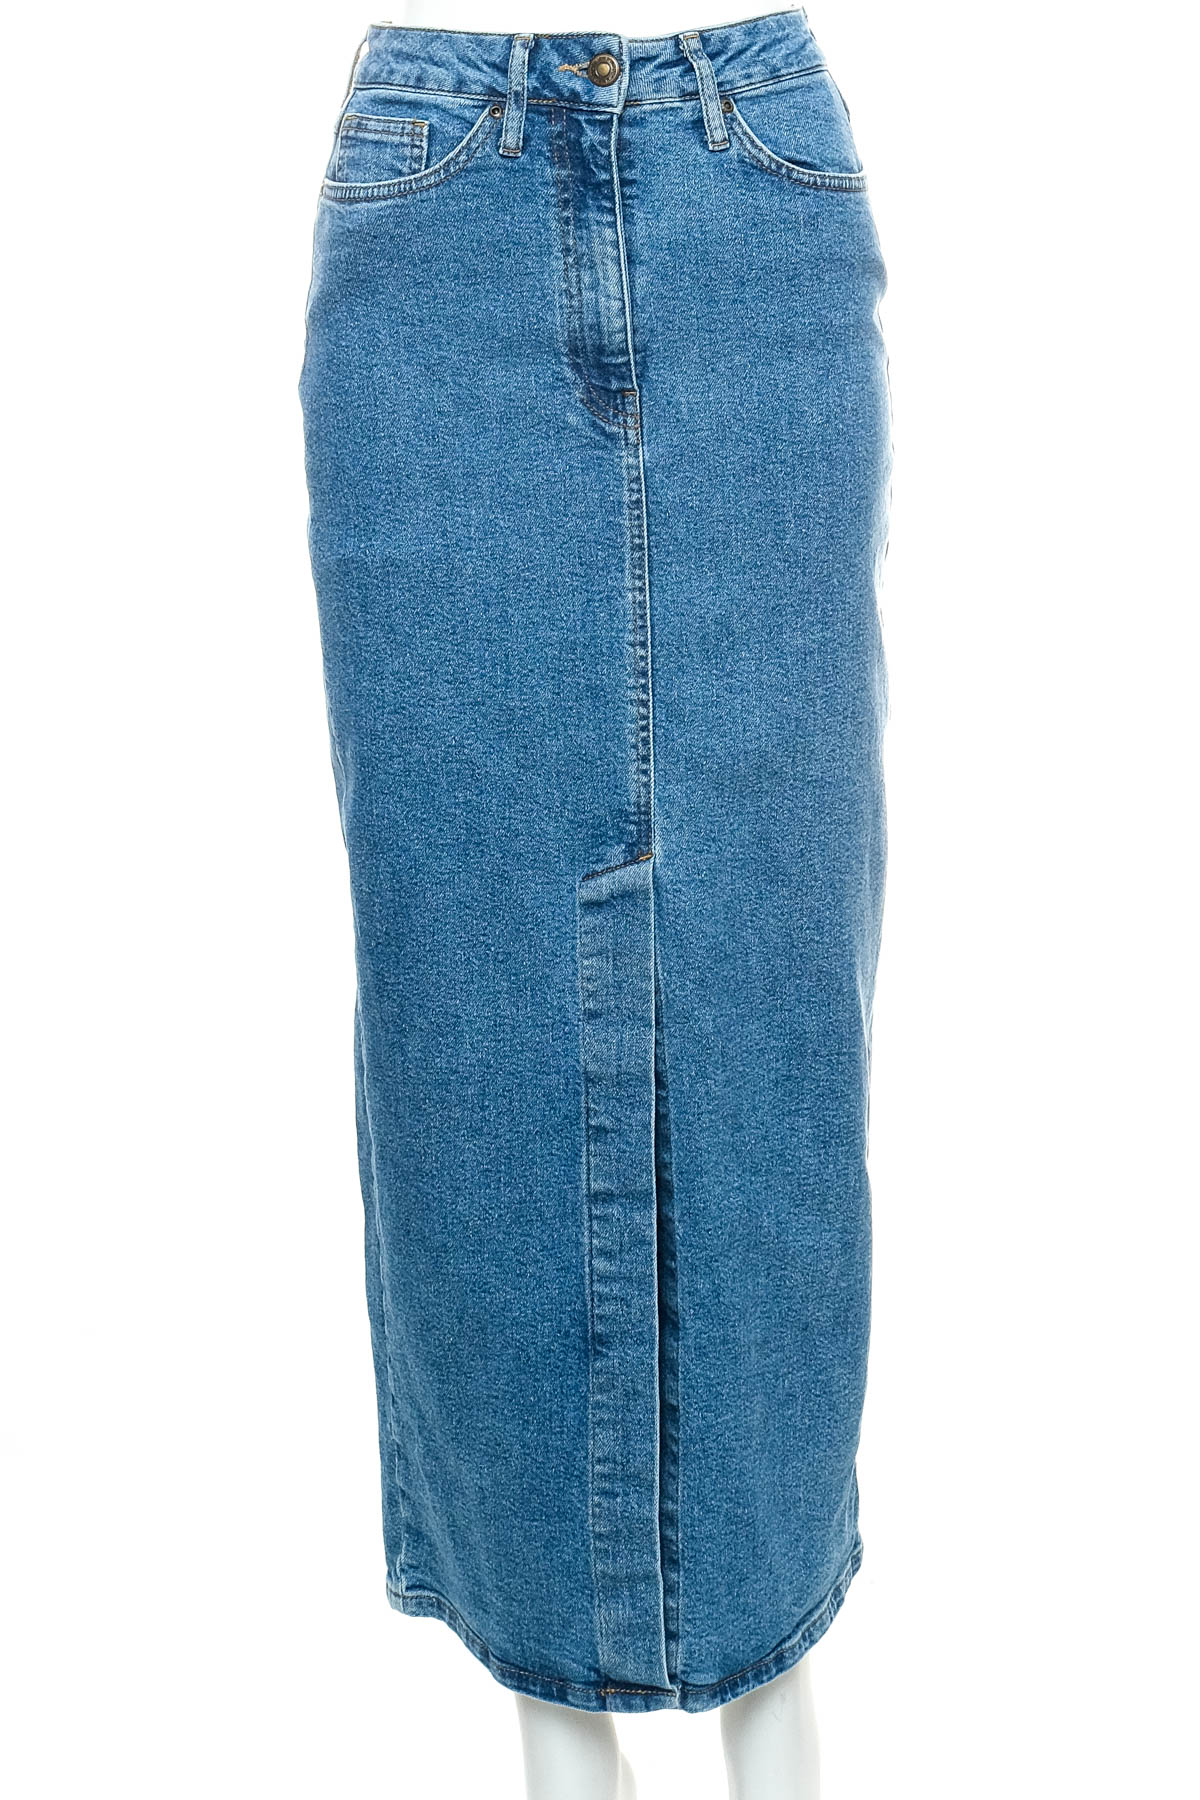 Spódnica jeansowa - TRND BY BELEBO - 0